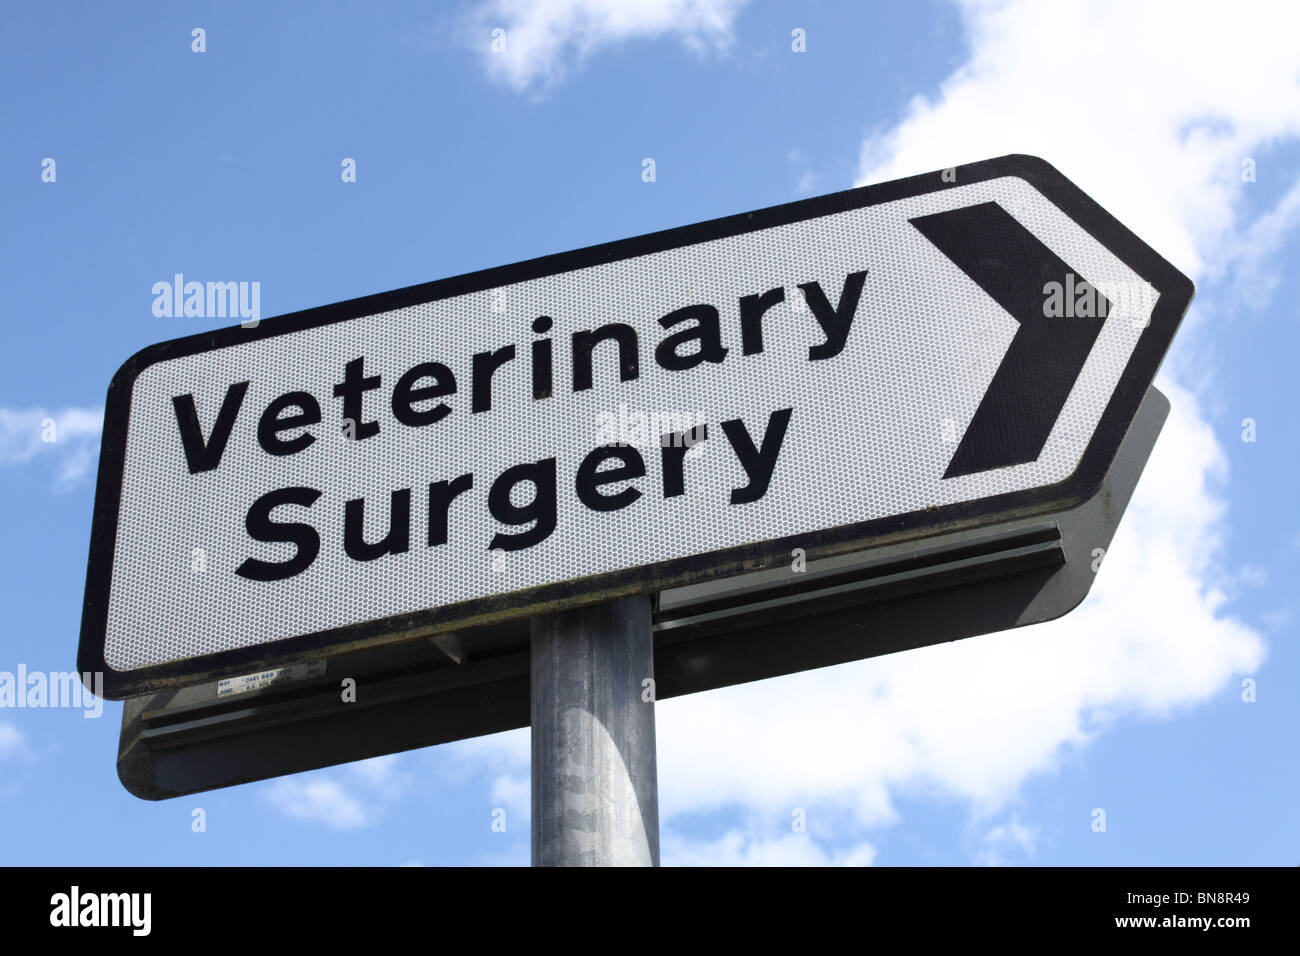 sign to veterinary surgery Stock Photo